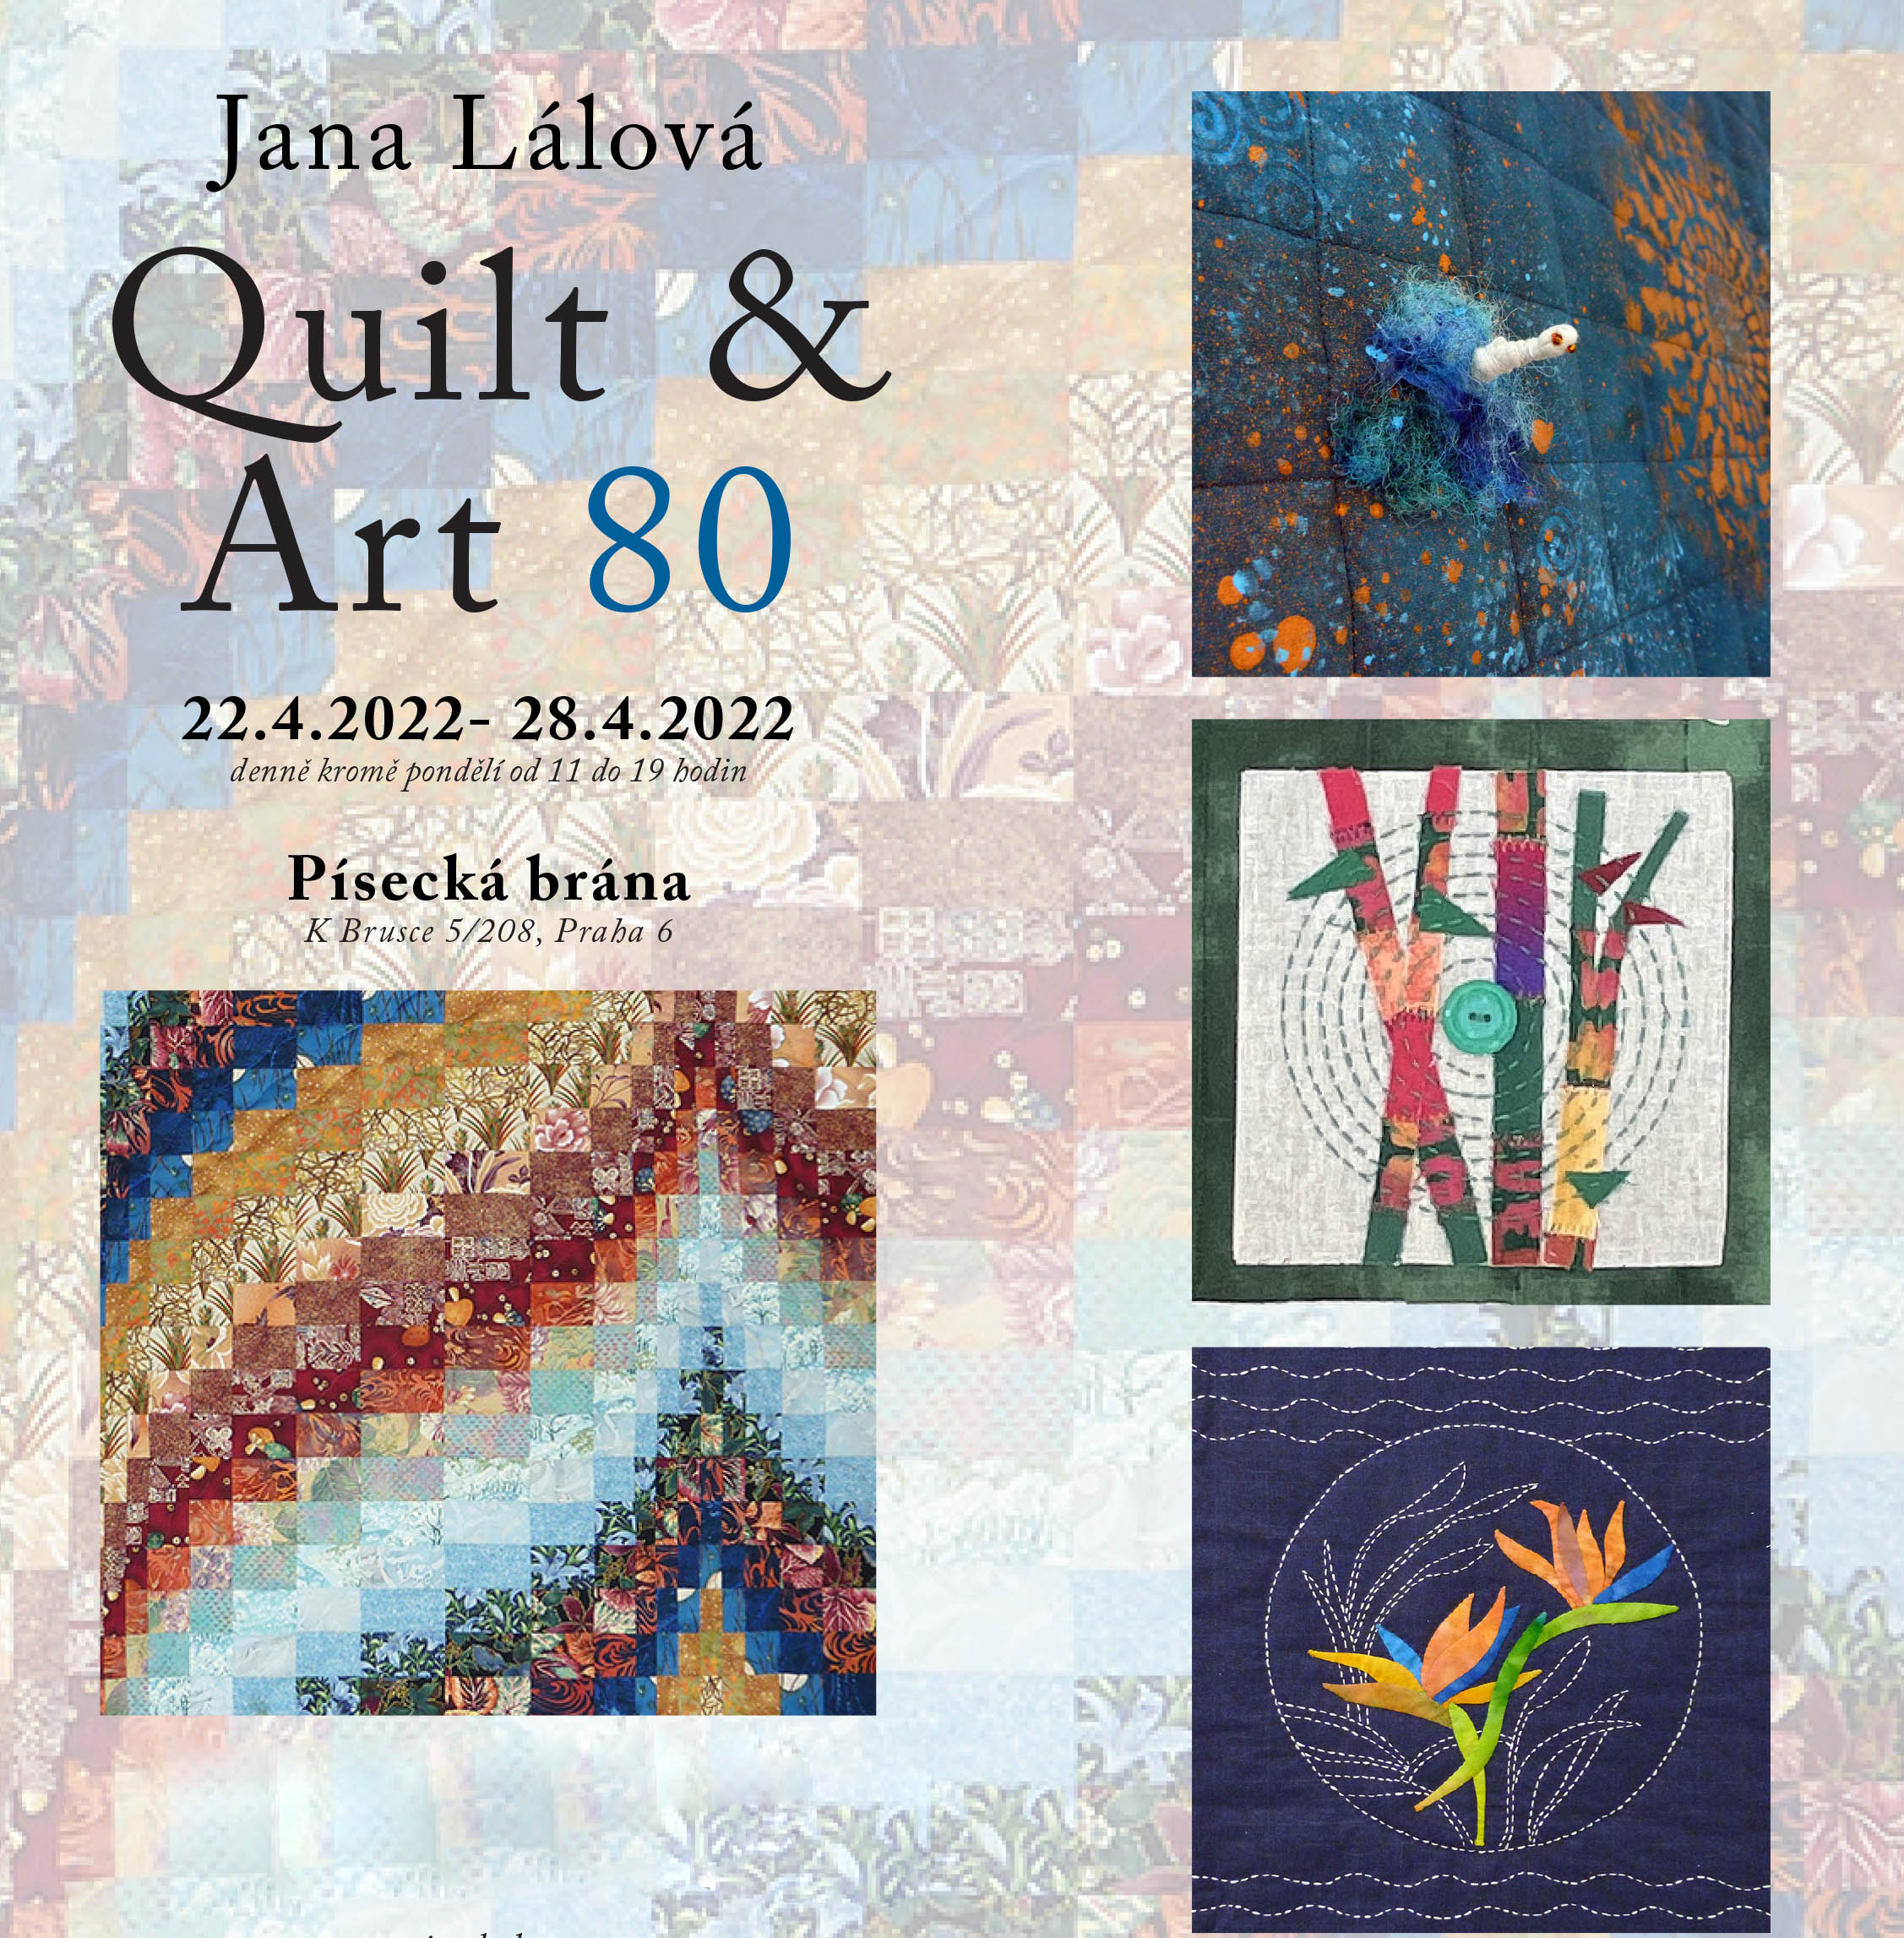 jana-lalova-quilt-art